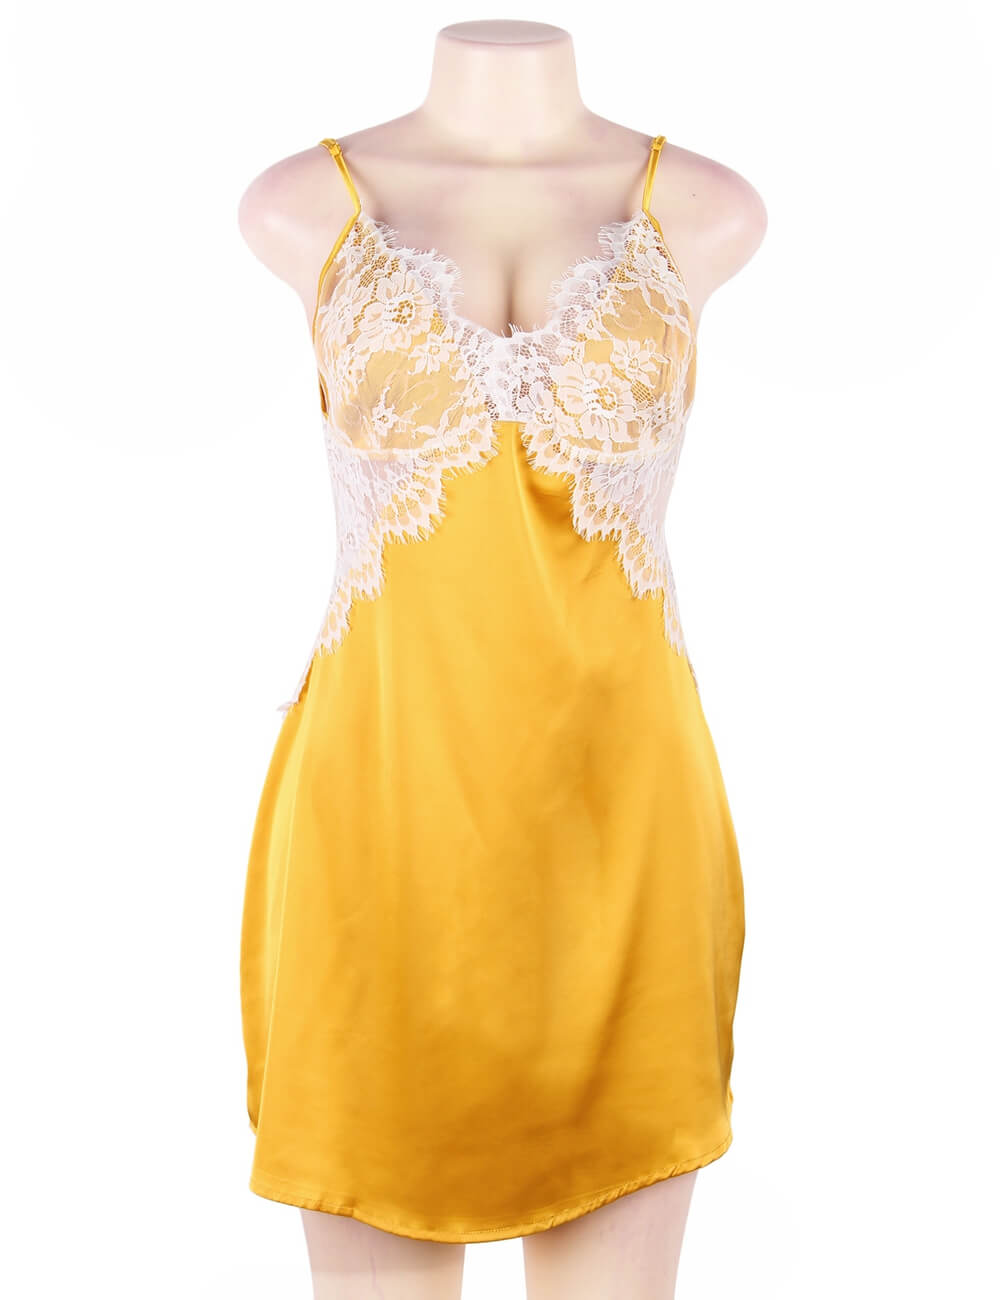 Strap Satin Sleepwear Dress For Women Sling Lace Nightgown Sexy